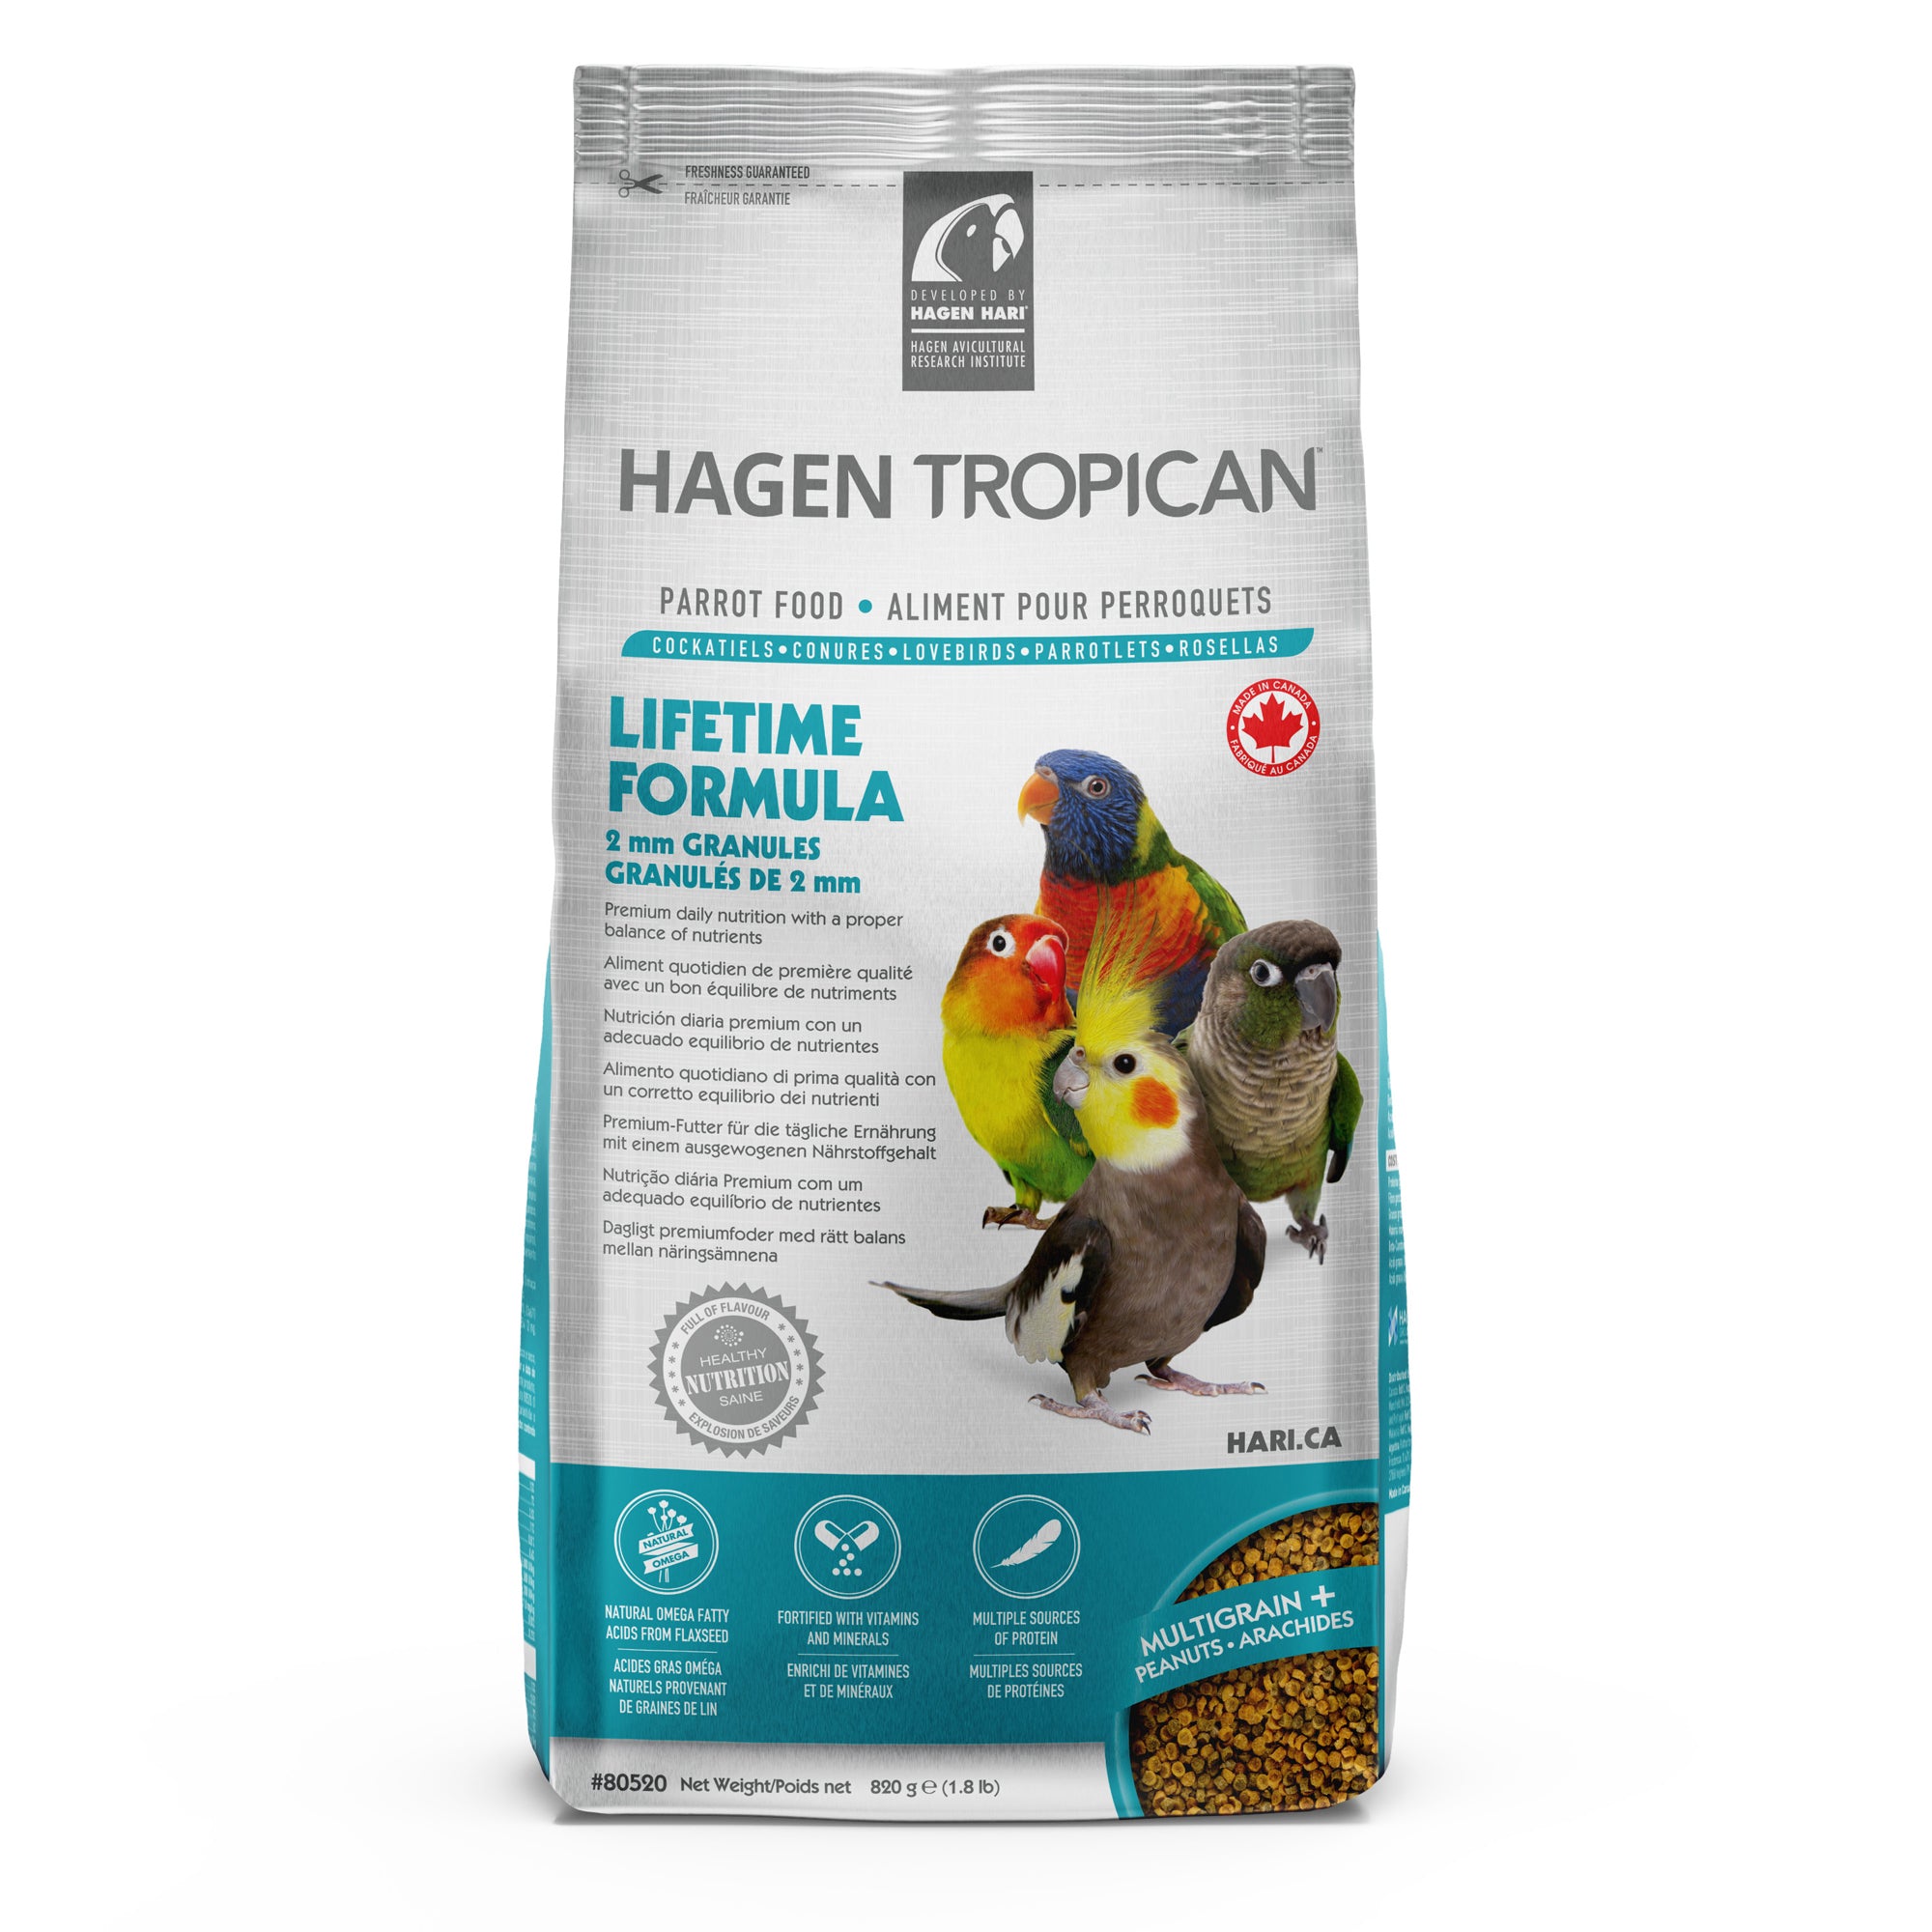 Hagen Hari Tropican Cockatiel Lifetime Granules 2mm 2 Sizes